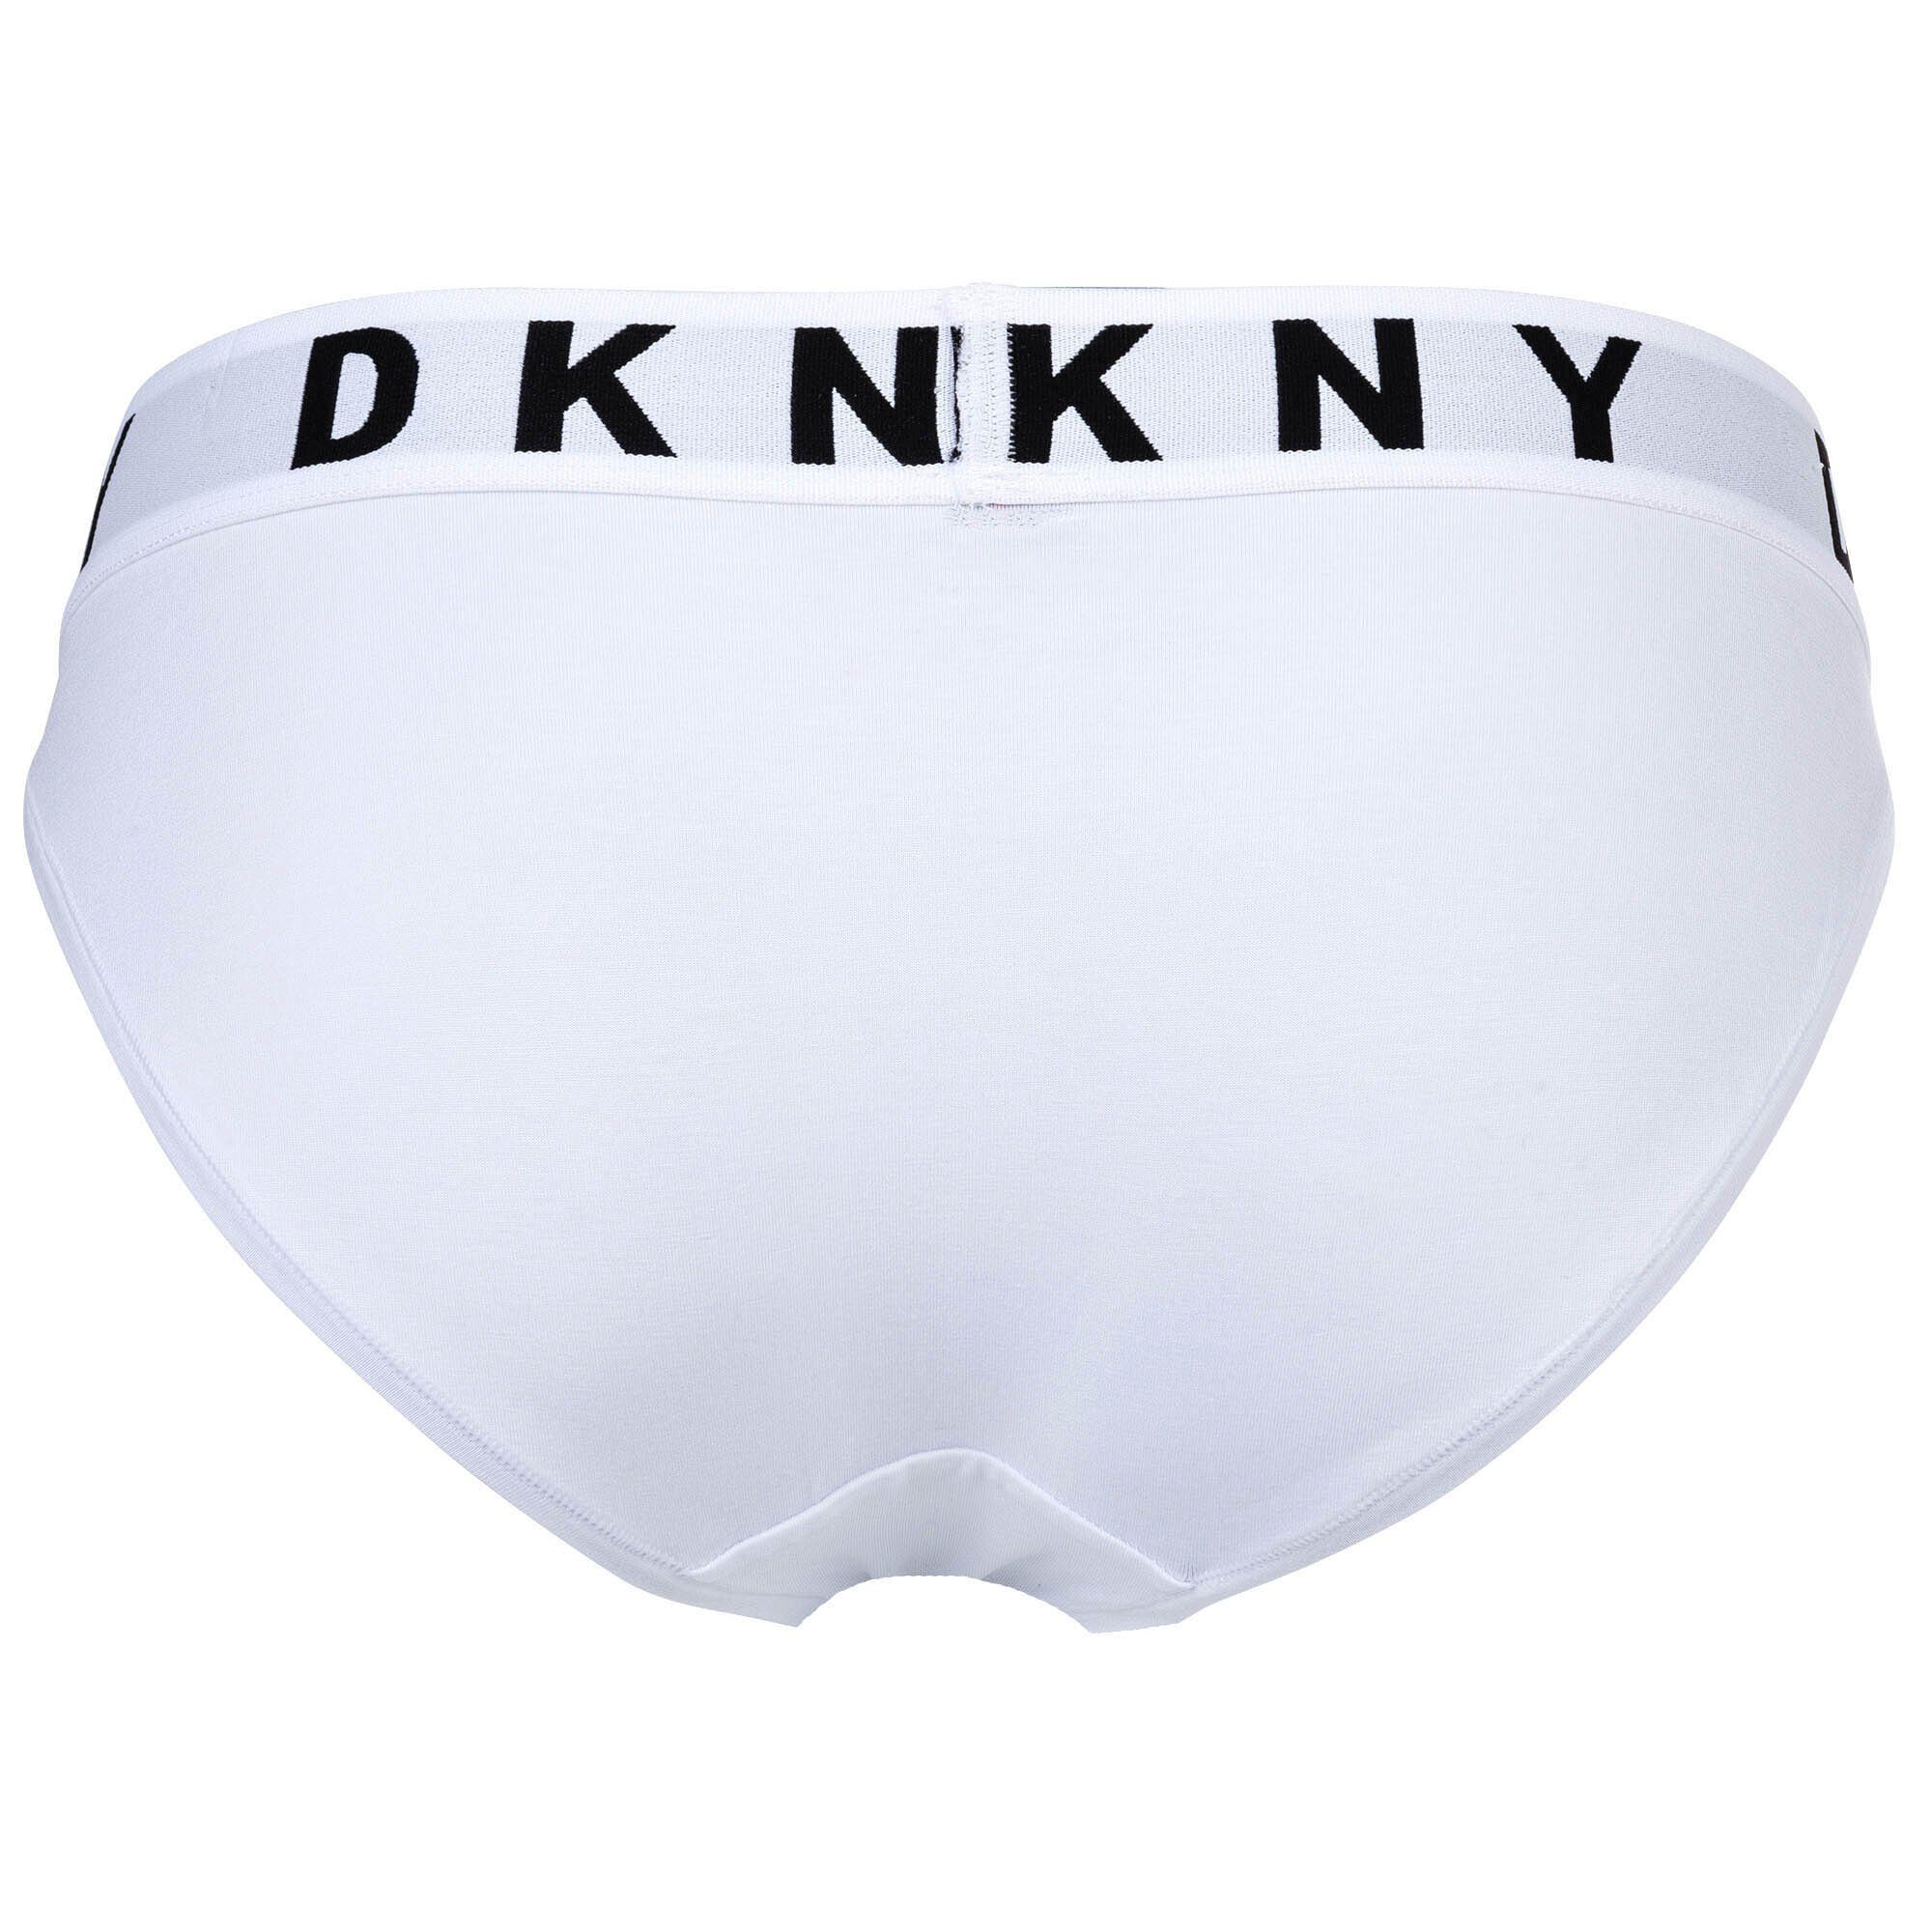 Stretch Slip Brief, DKNY Cotton Damen Modal - Panty Weiß